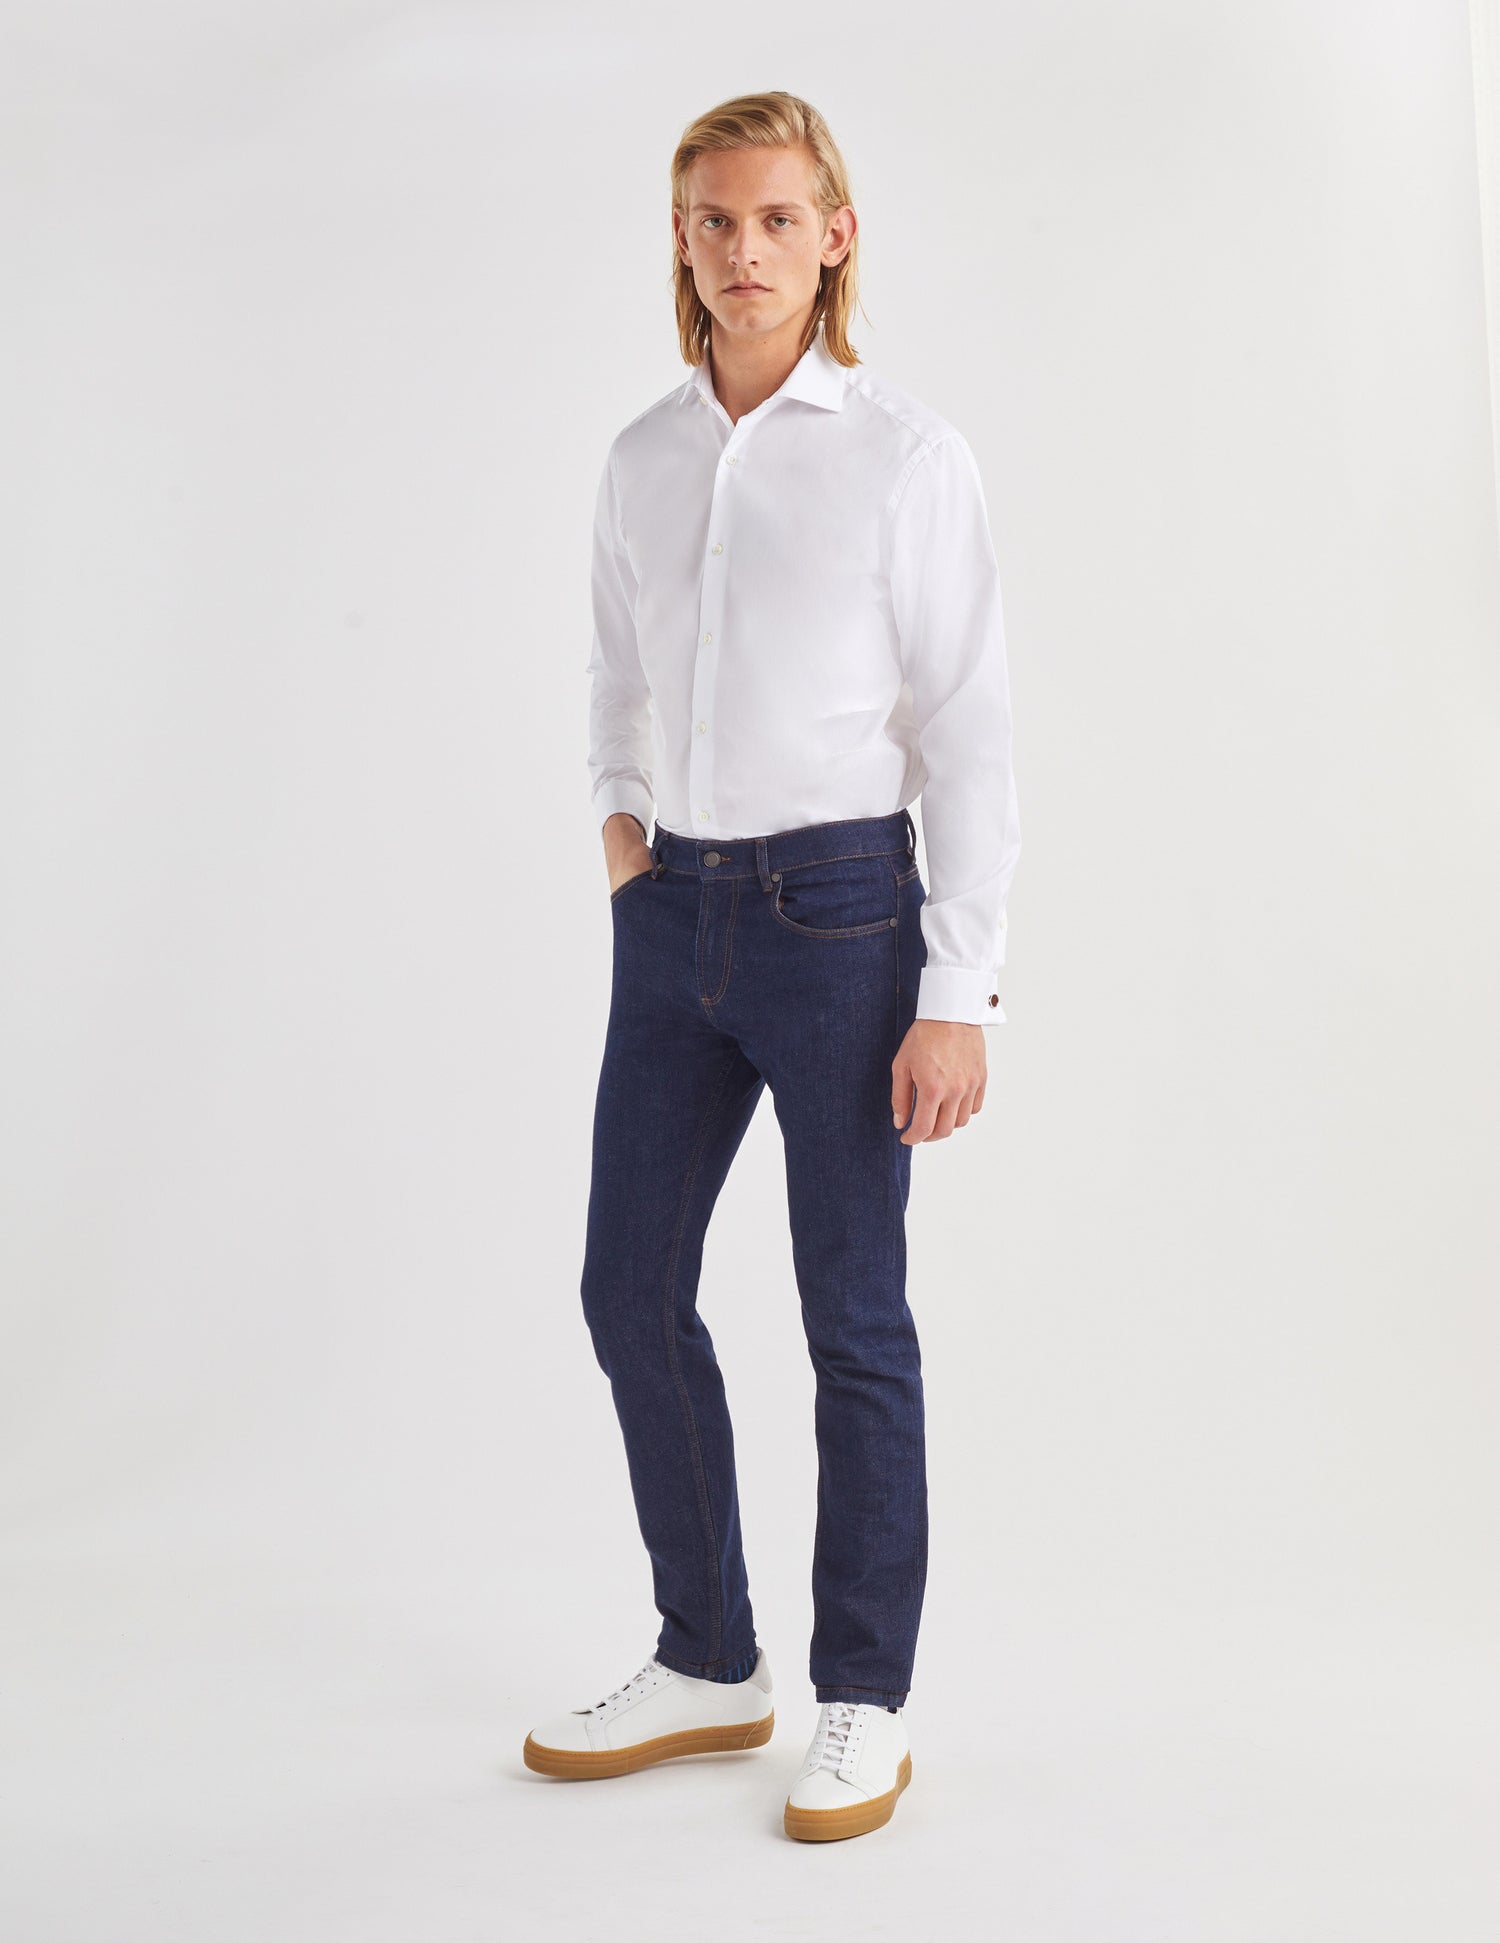 Semi-fitted white shirt - Poplin - Italian Collar - French Cuffs#5